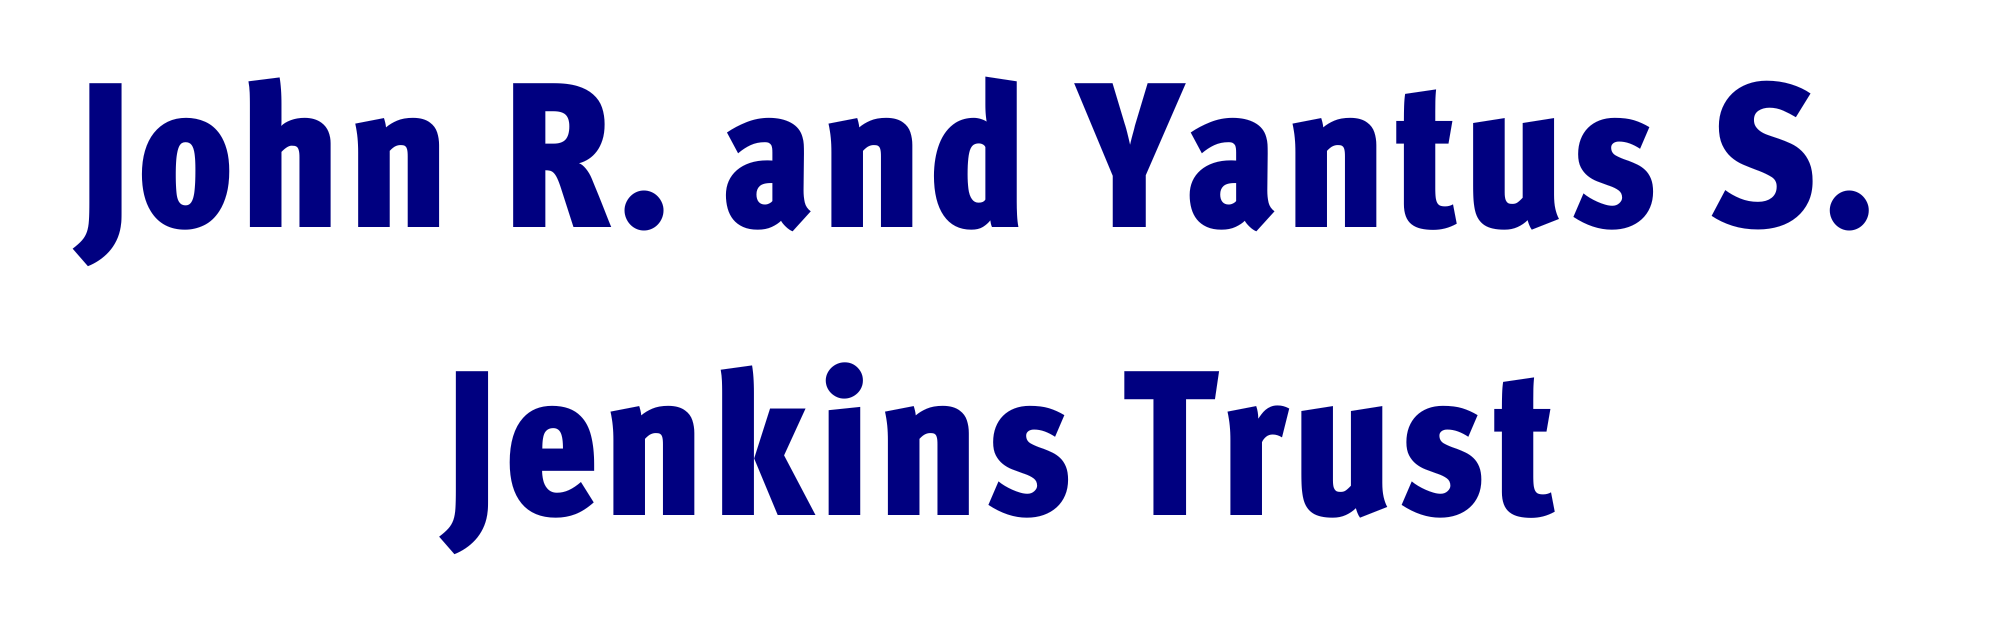 John R. and Yantus S.  Jenkins Trust